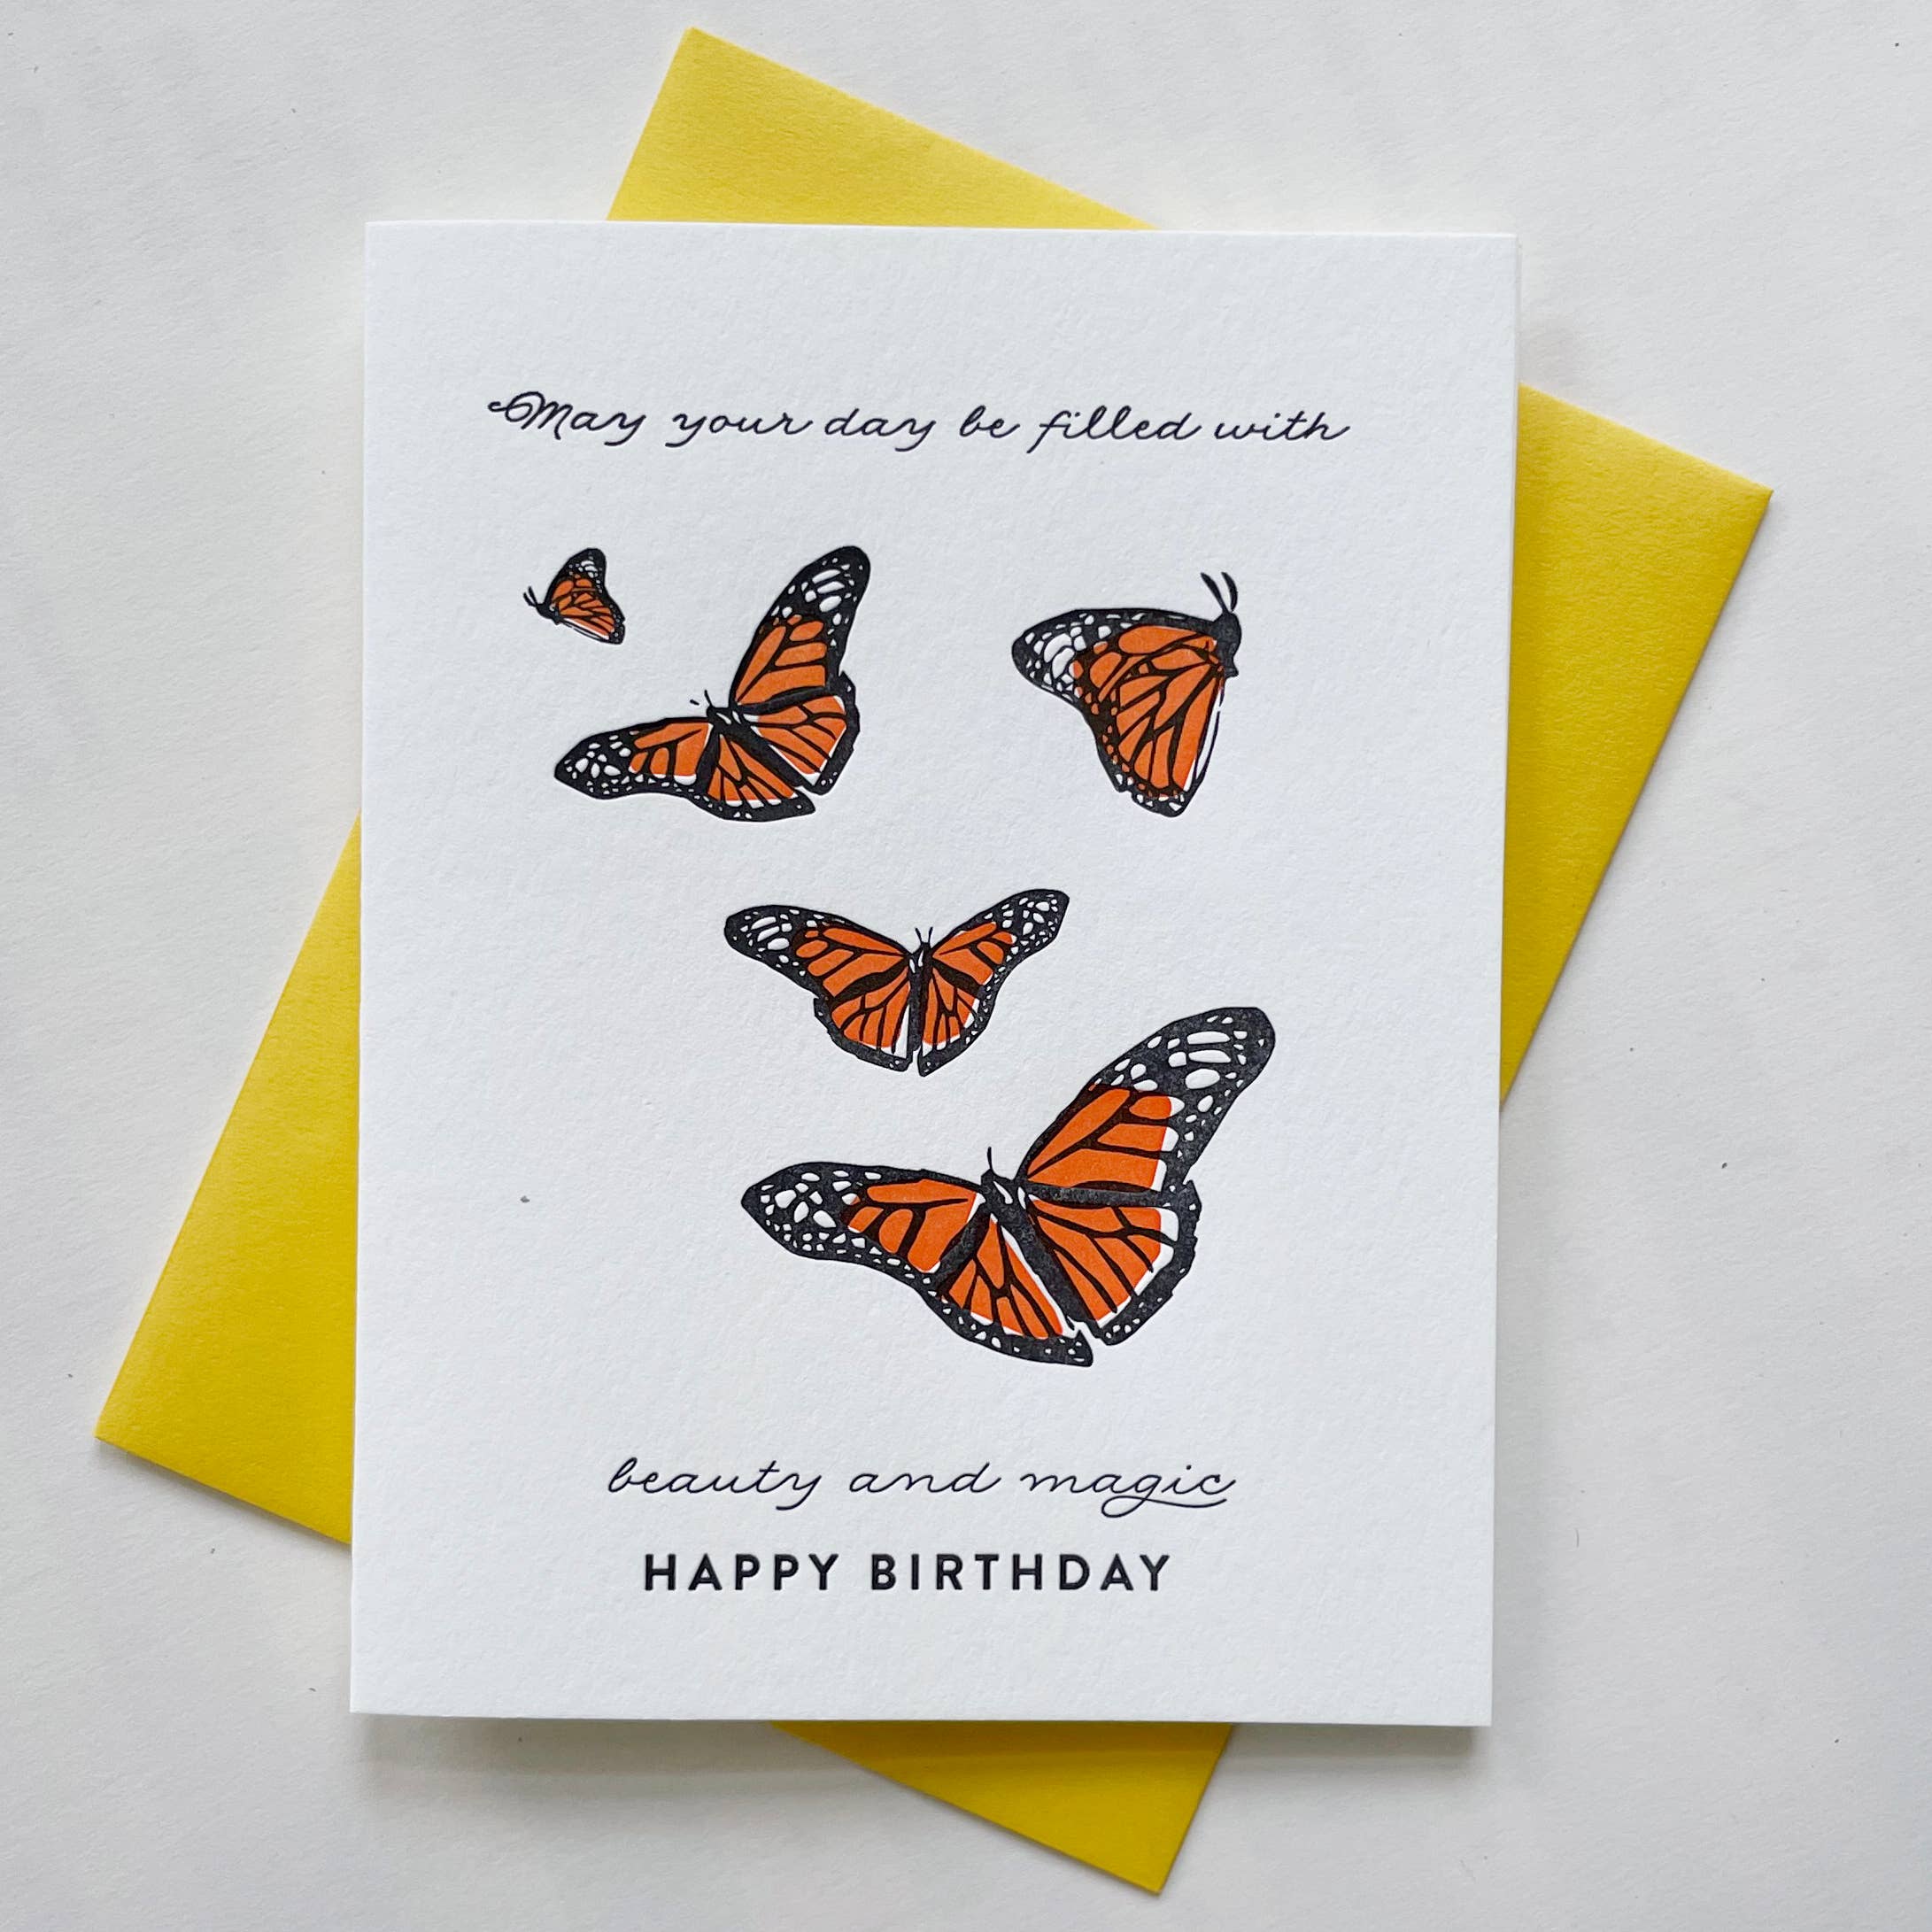 Steel Petal Press - Magic Butterfly Birthday